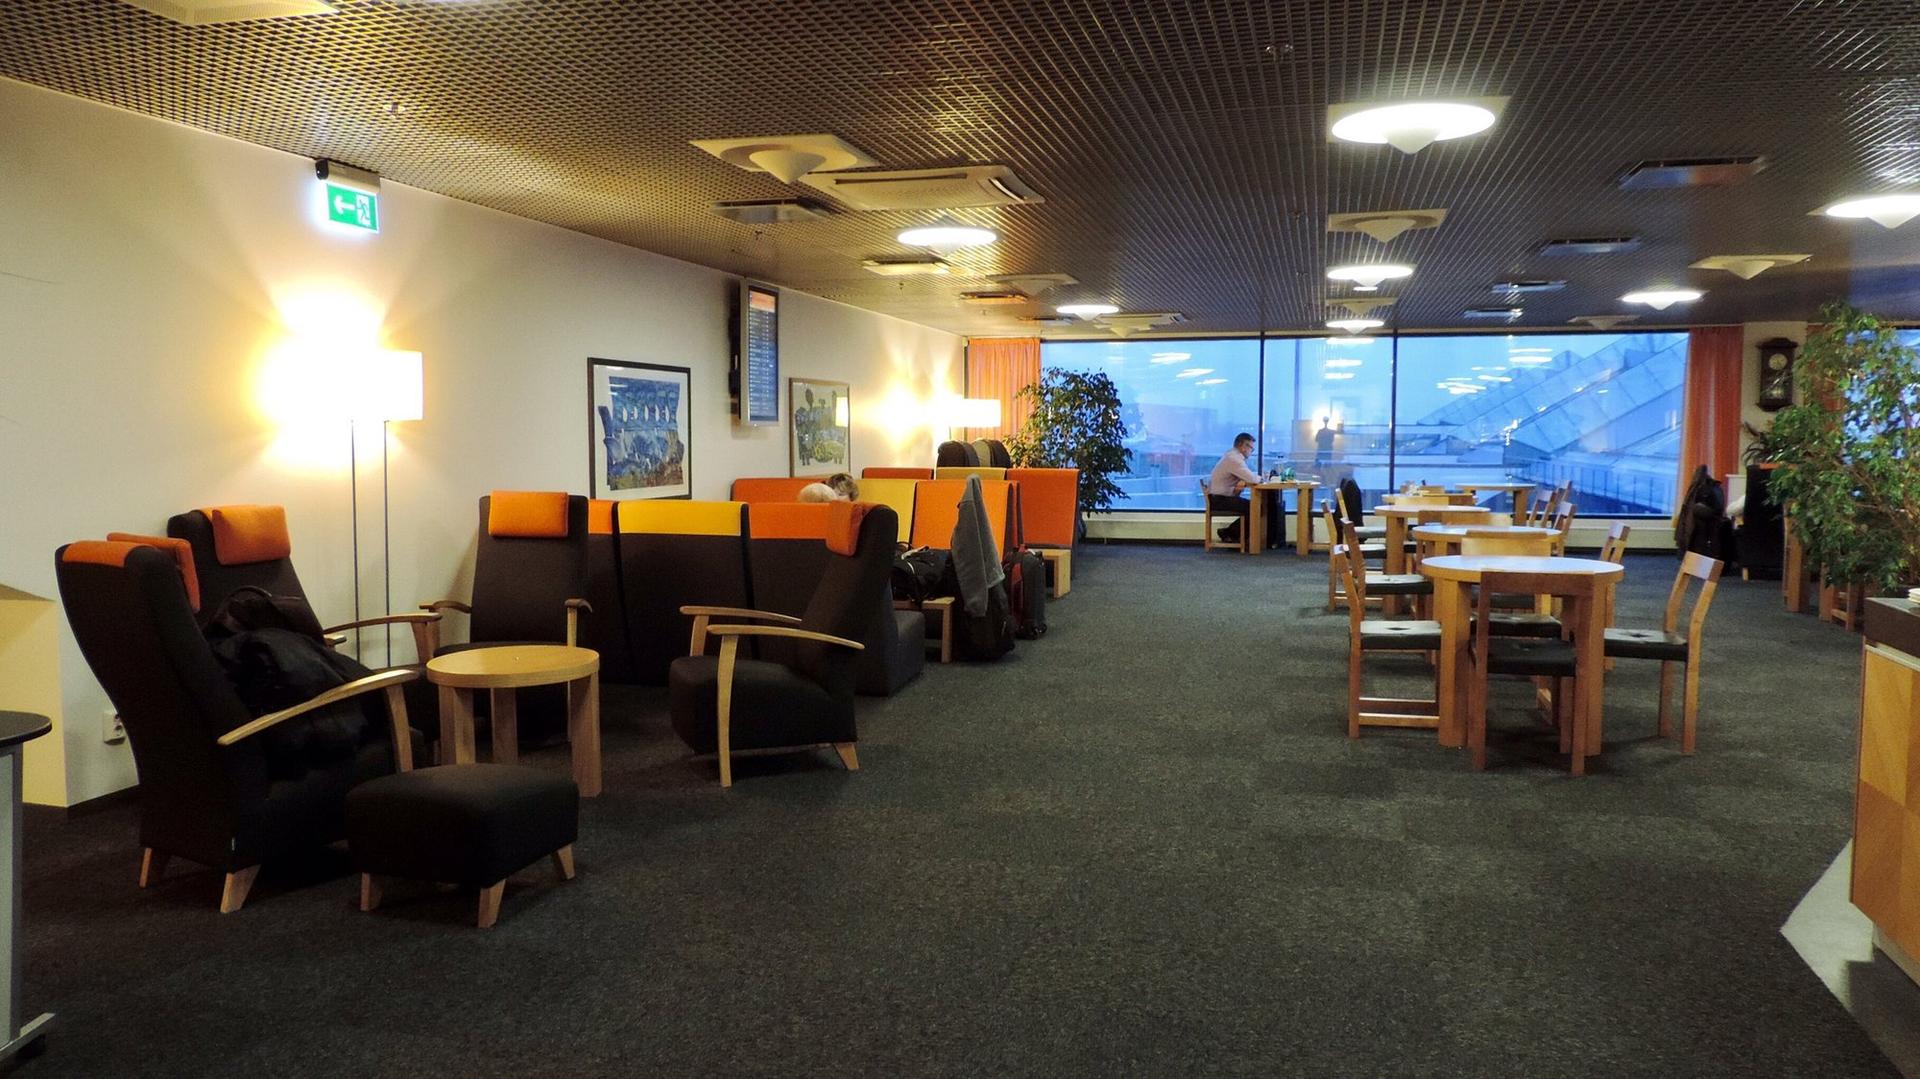 Tallinn Airport LHV Lounge image 1 of 20